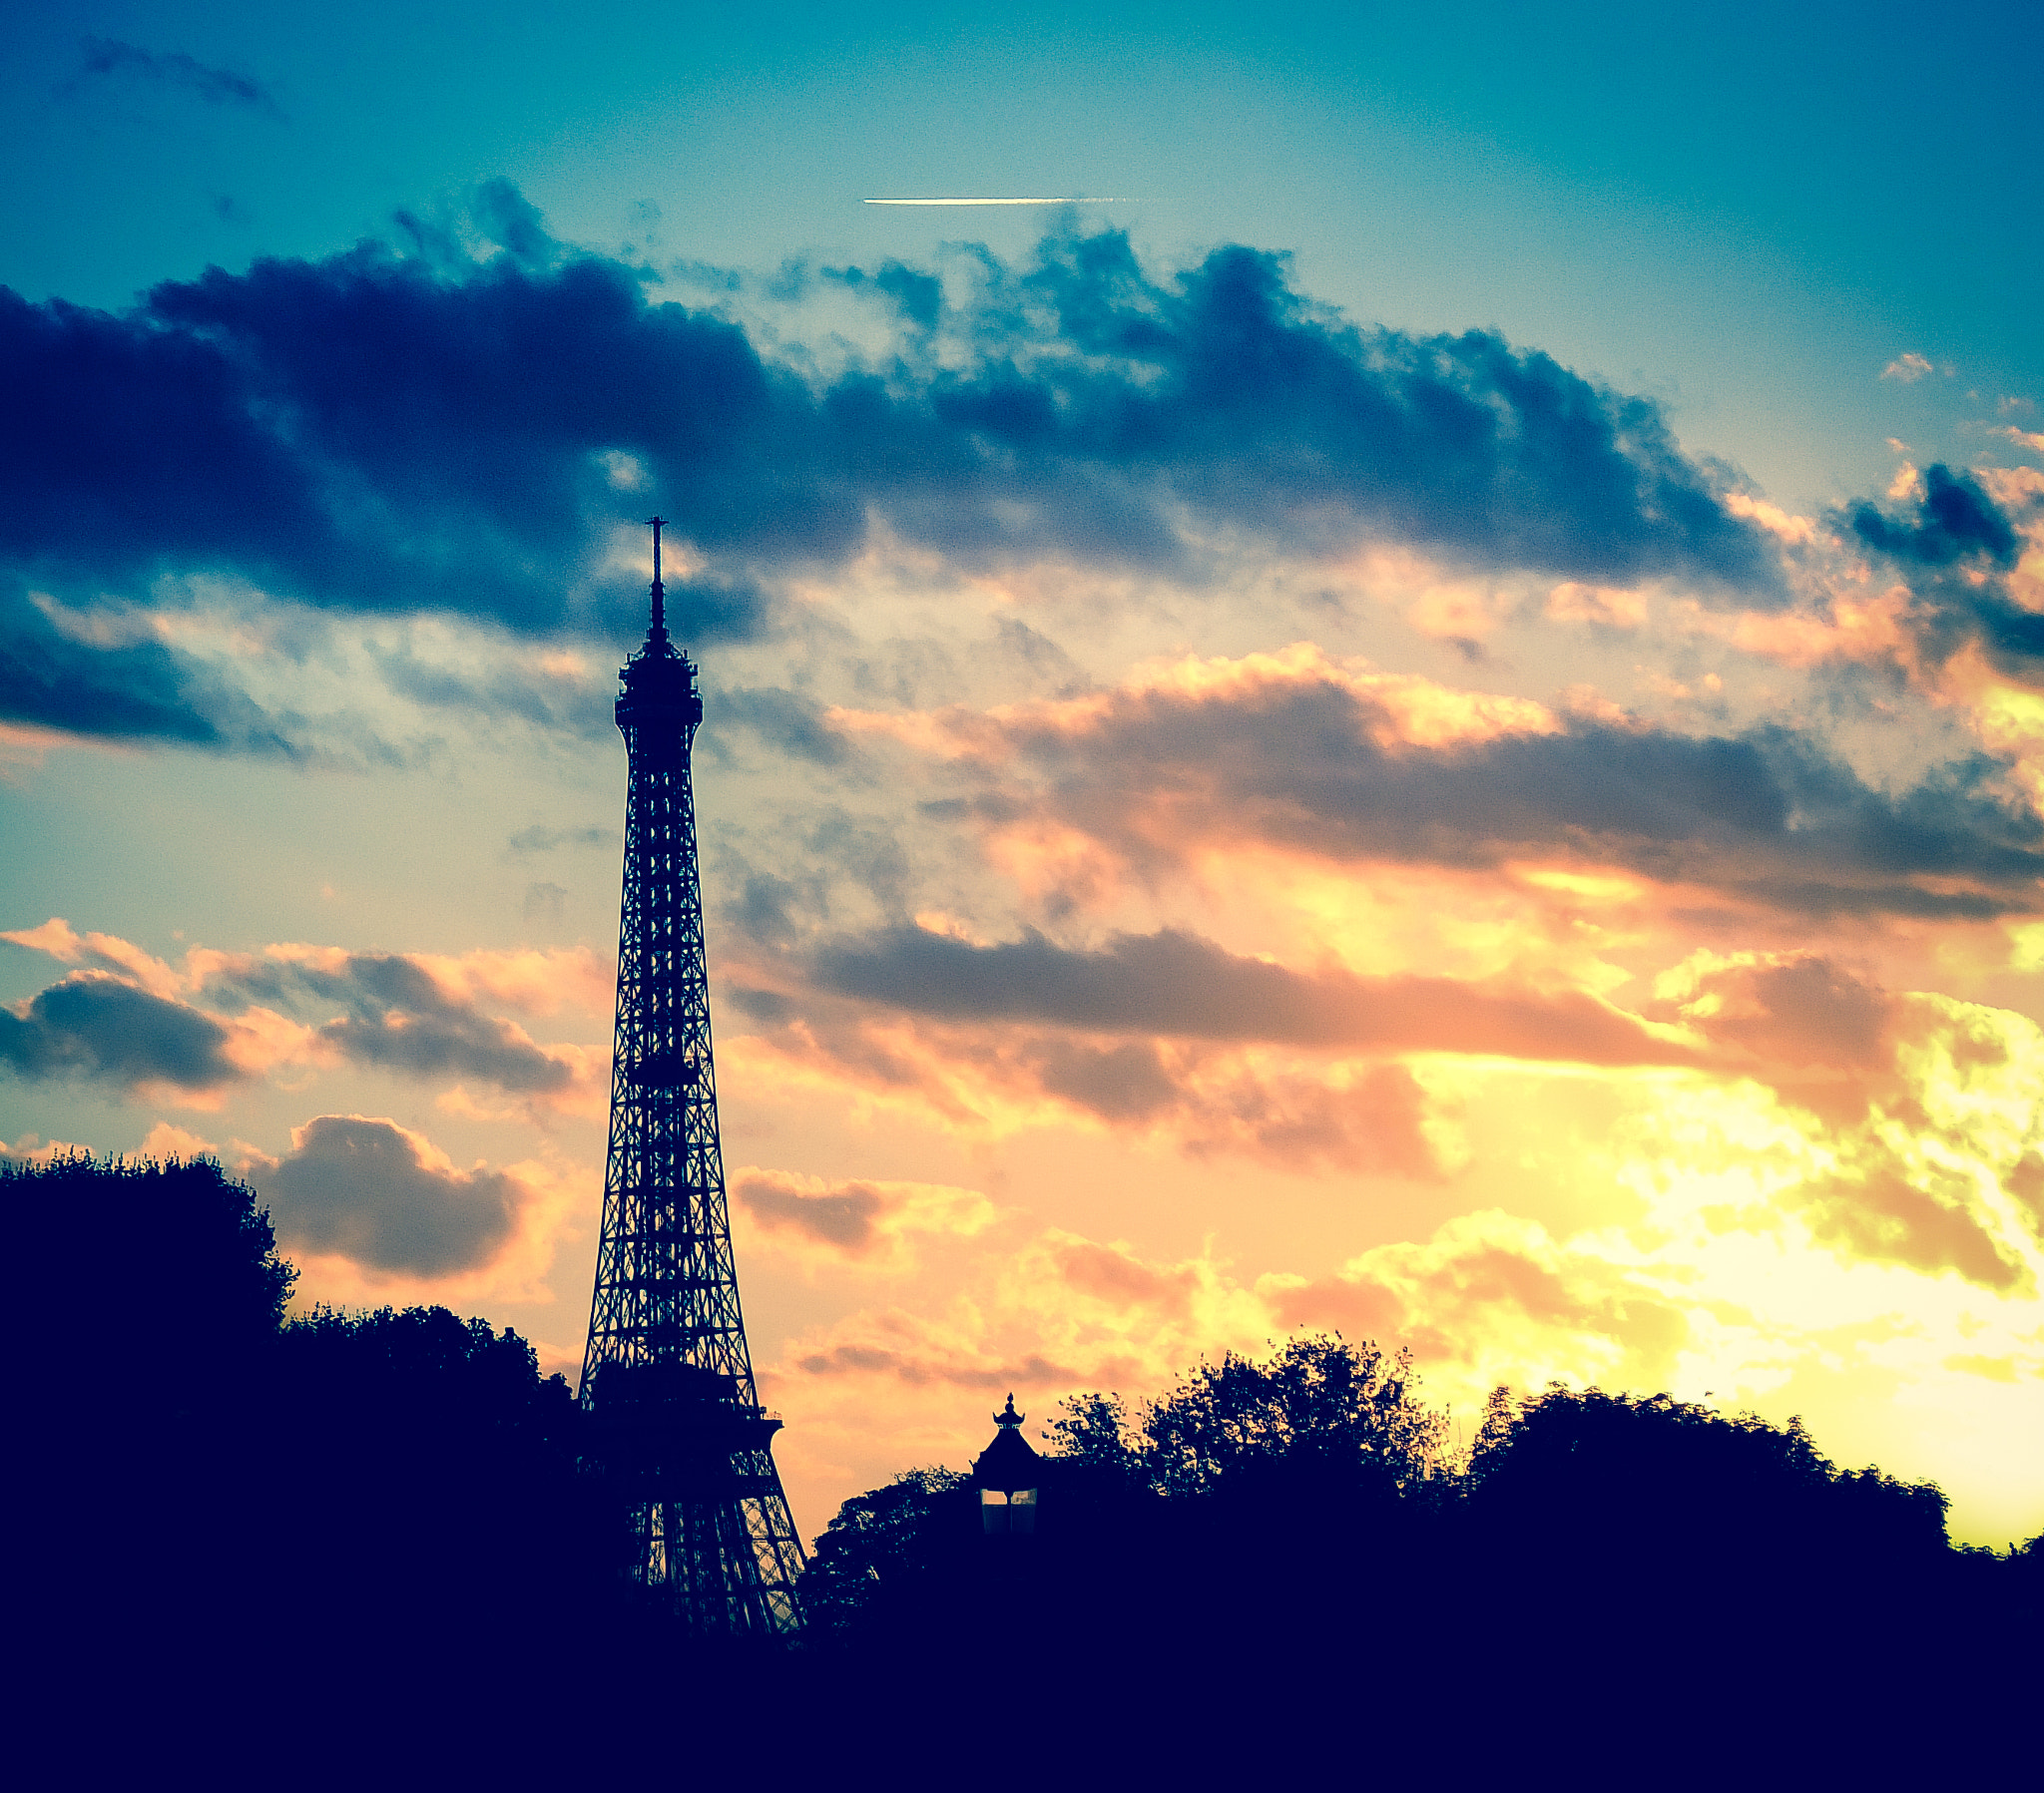 Atardecer en Paris by DRAGOX photo / 500px